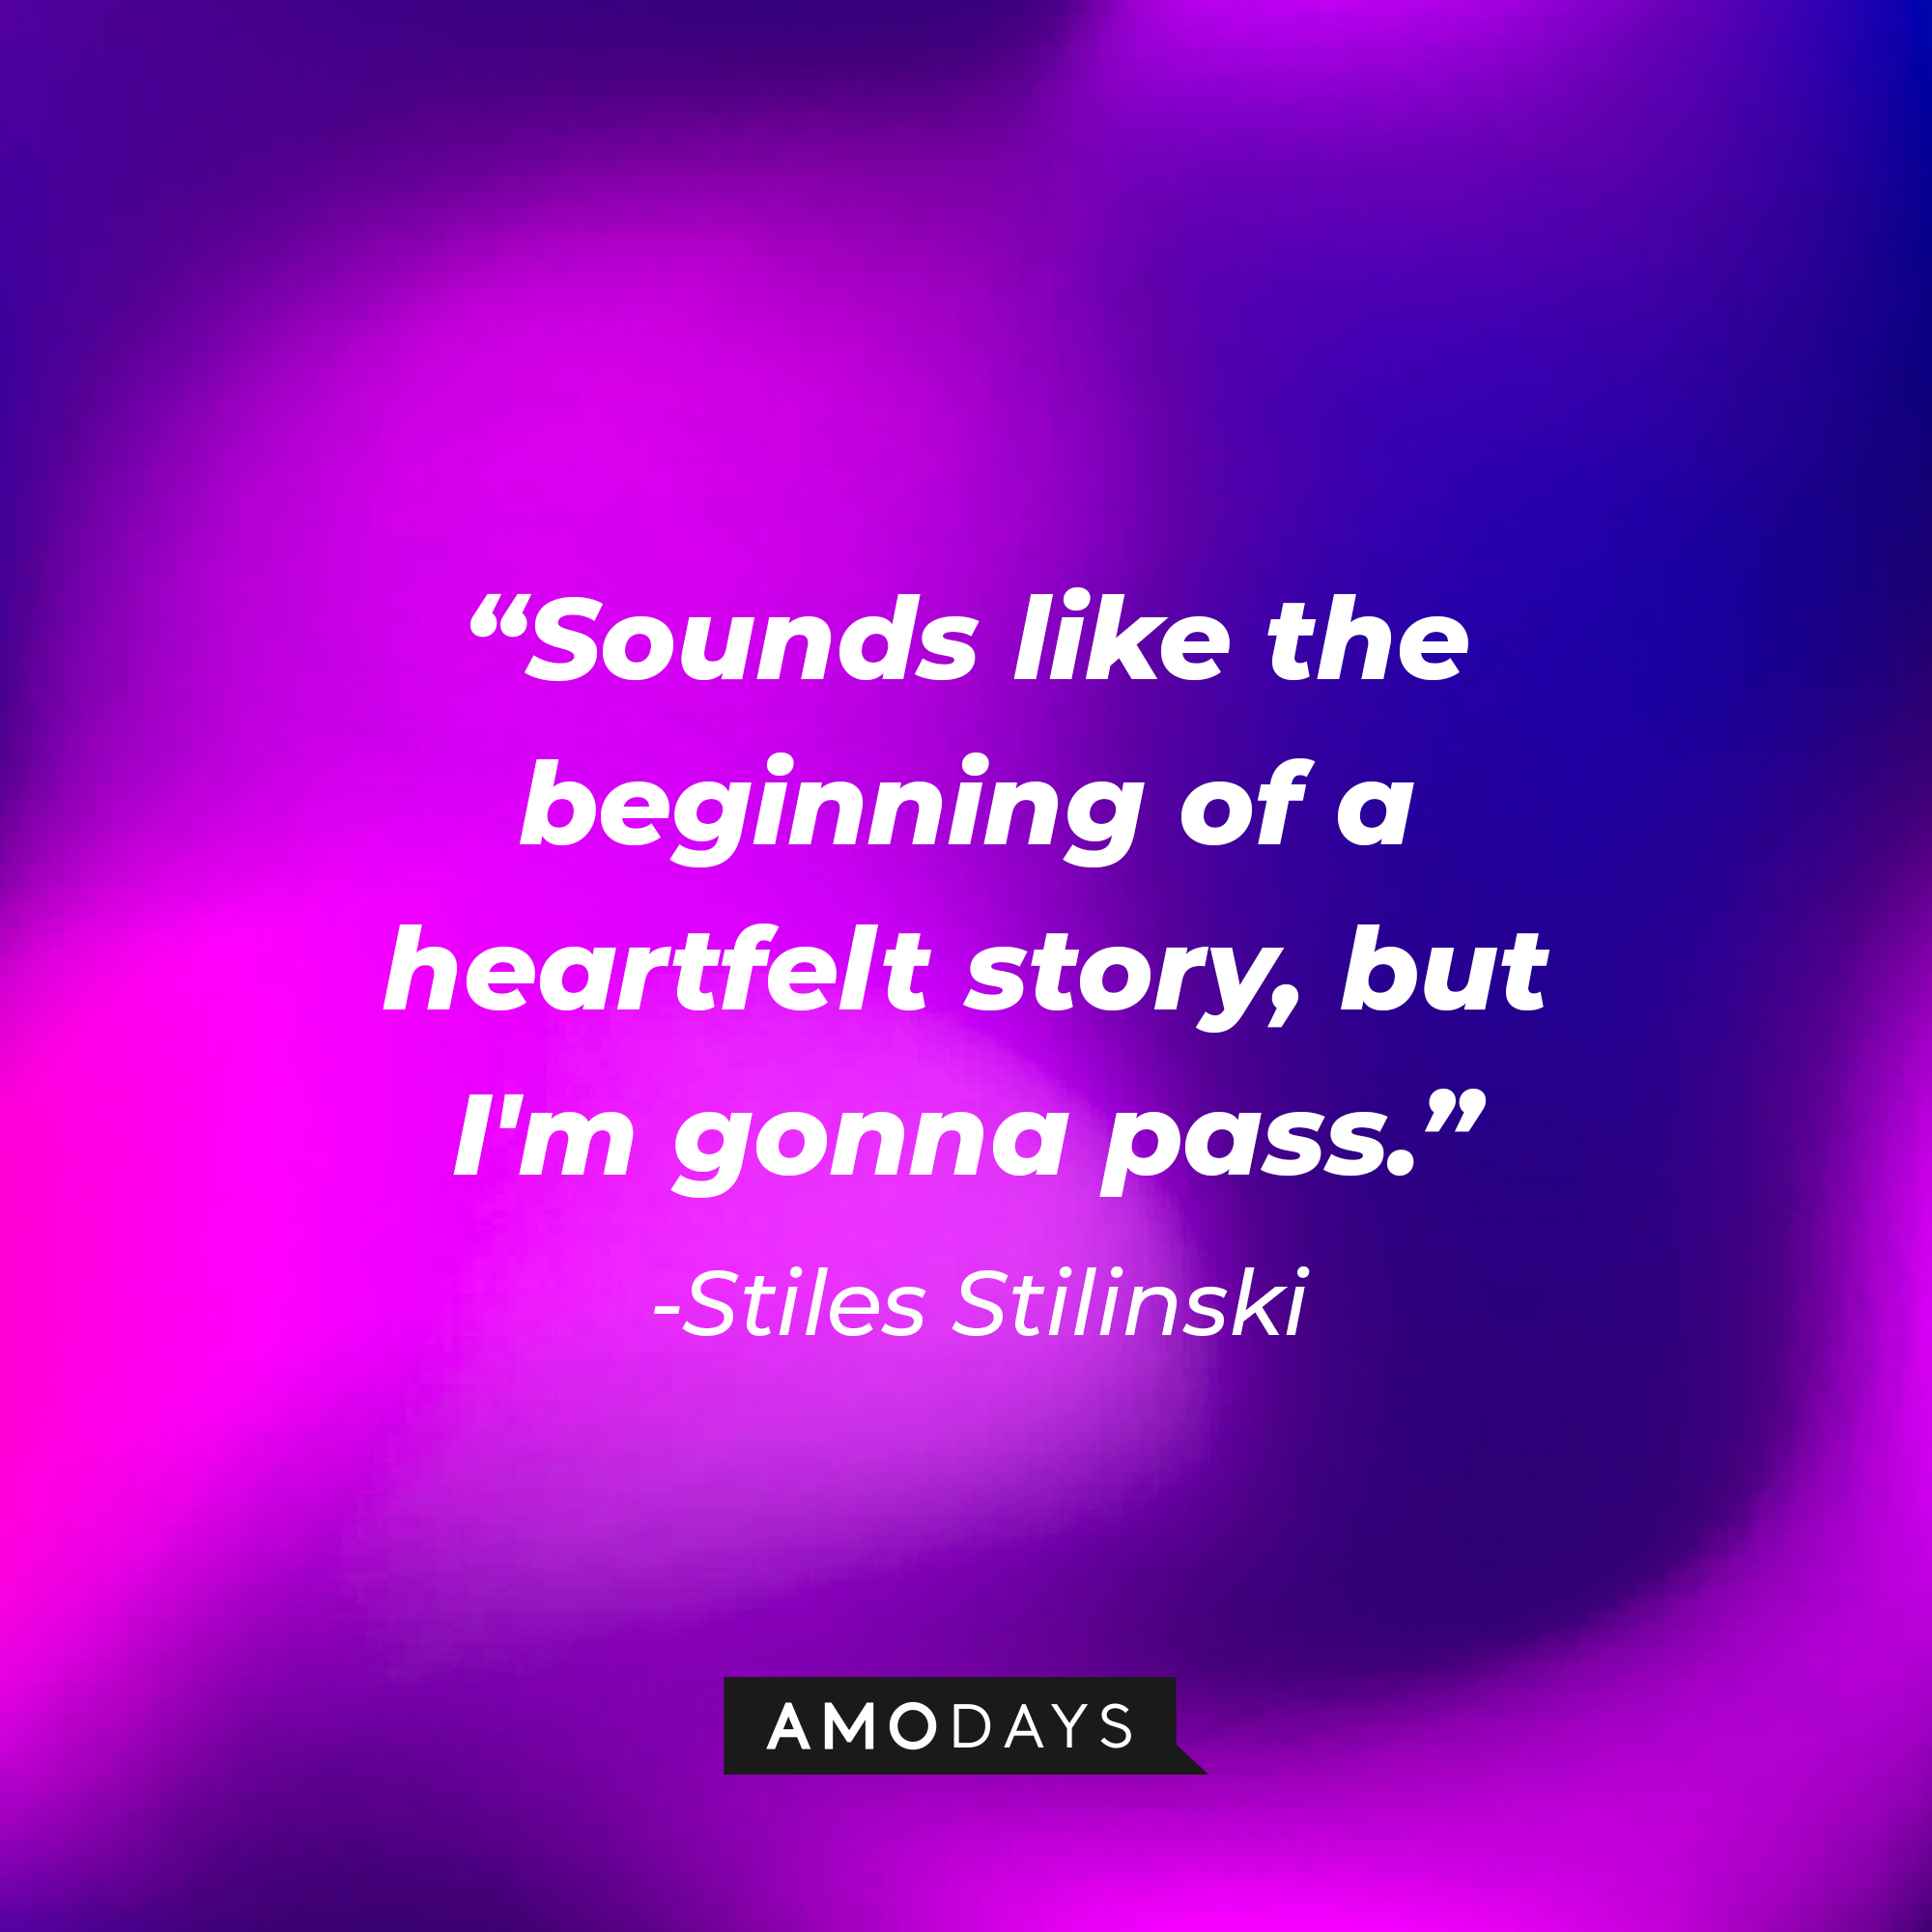 Stiles Stilinski's quote: "Sounds like the beginning of a heartfelt story, but I'm gonna pass." | Image: AmoDays